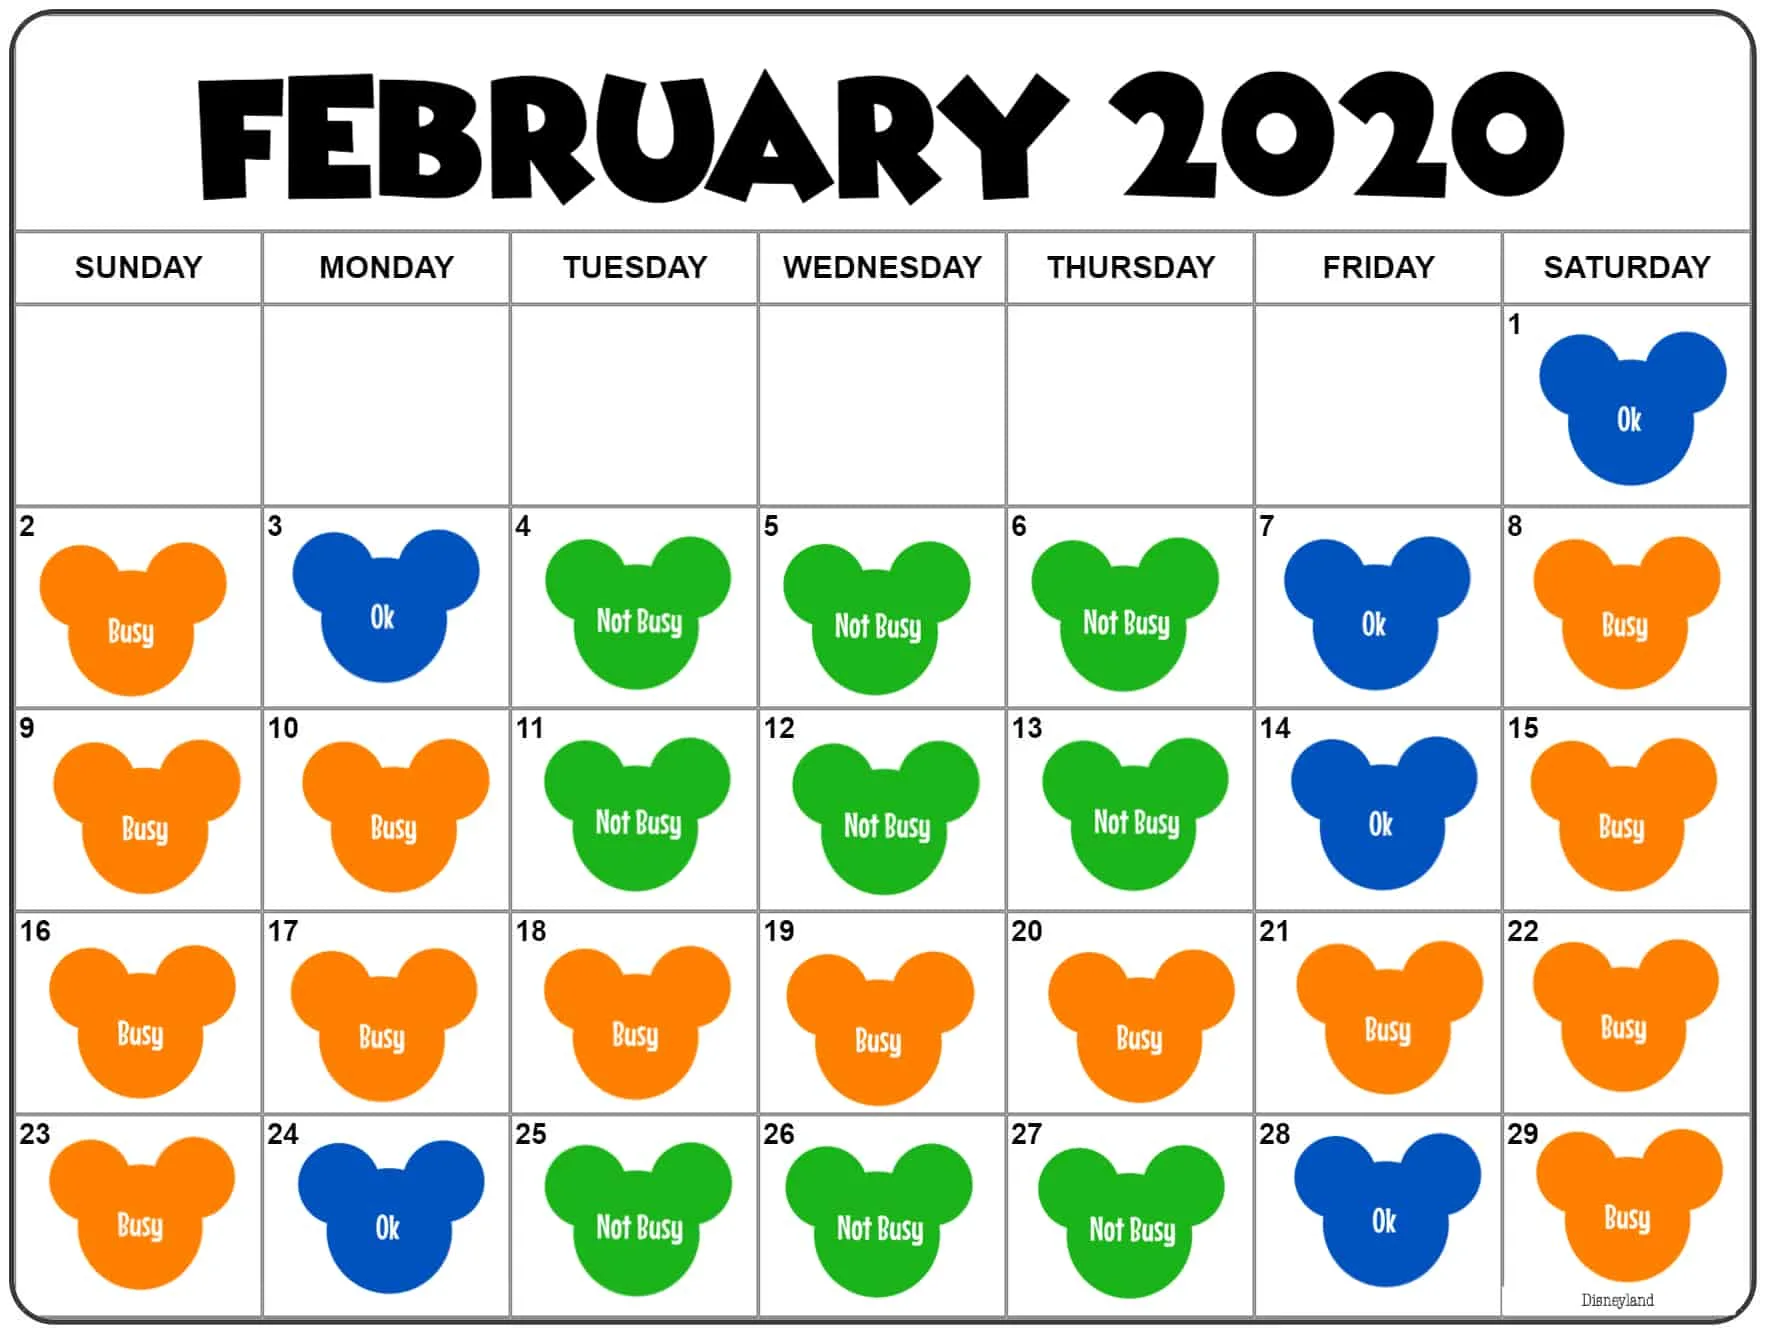 February 2020 Disneyland Crowd Calendar